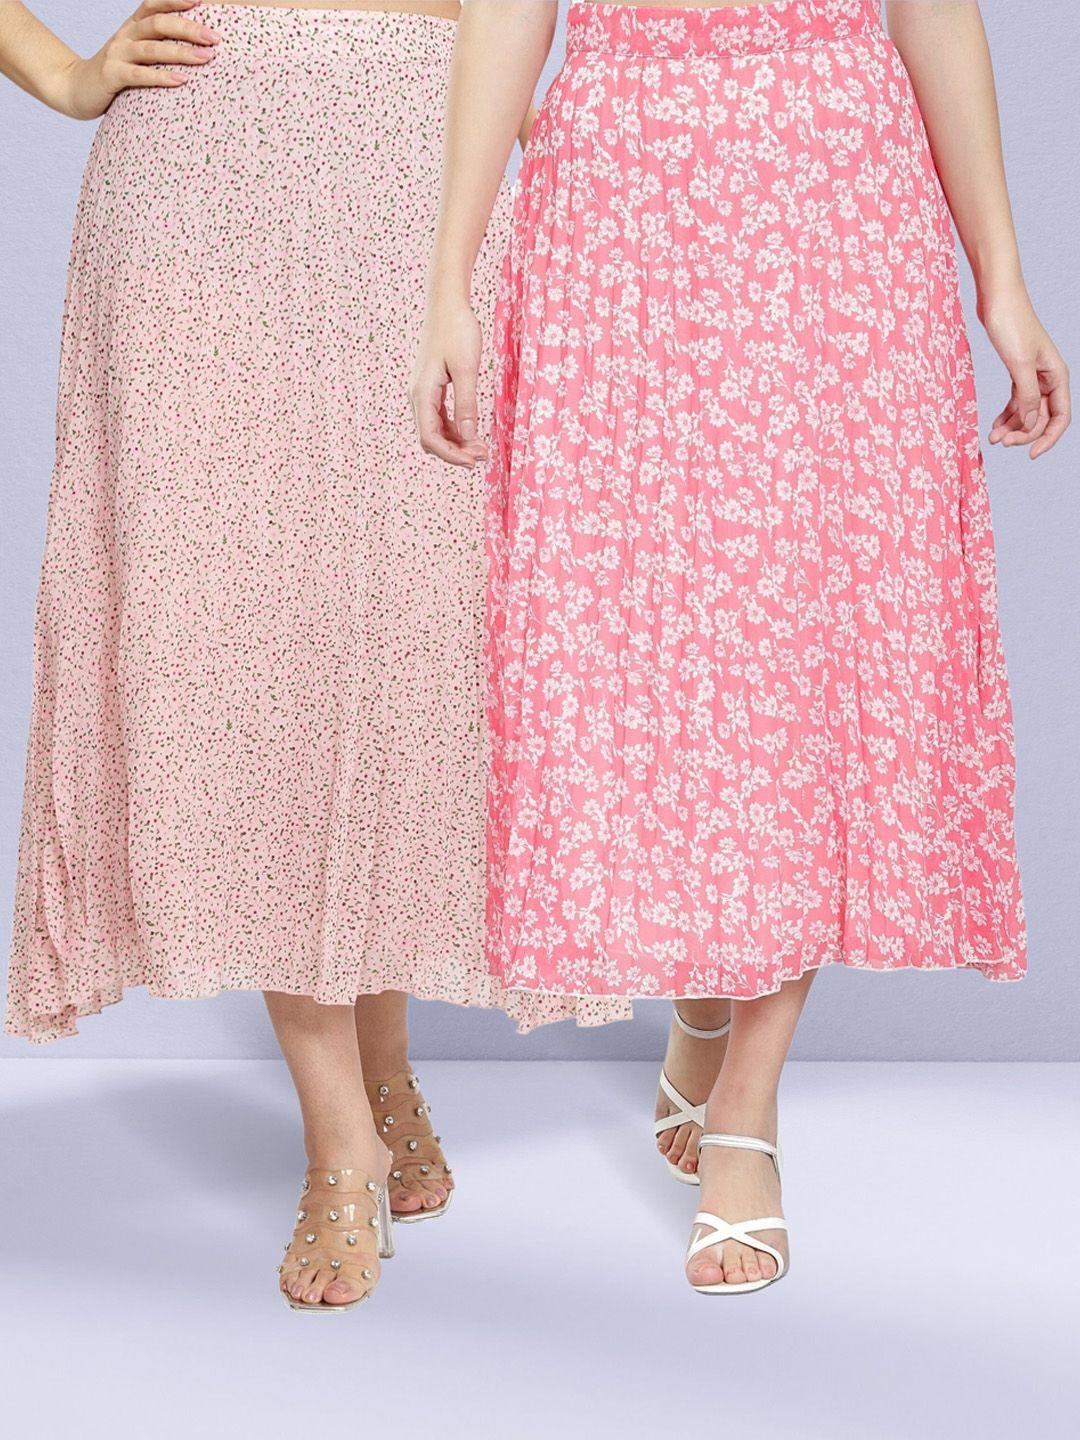 nuevosdamas pack of 2 floral printed a-line midi skirts